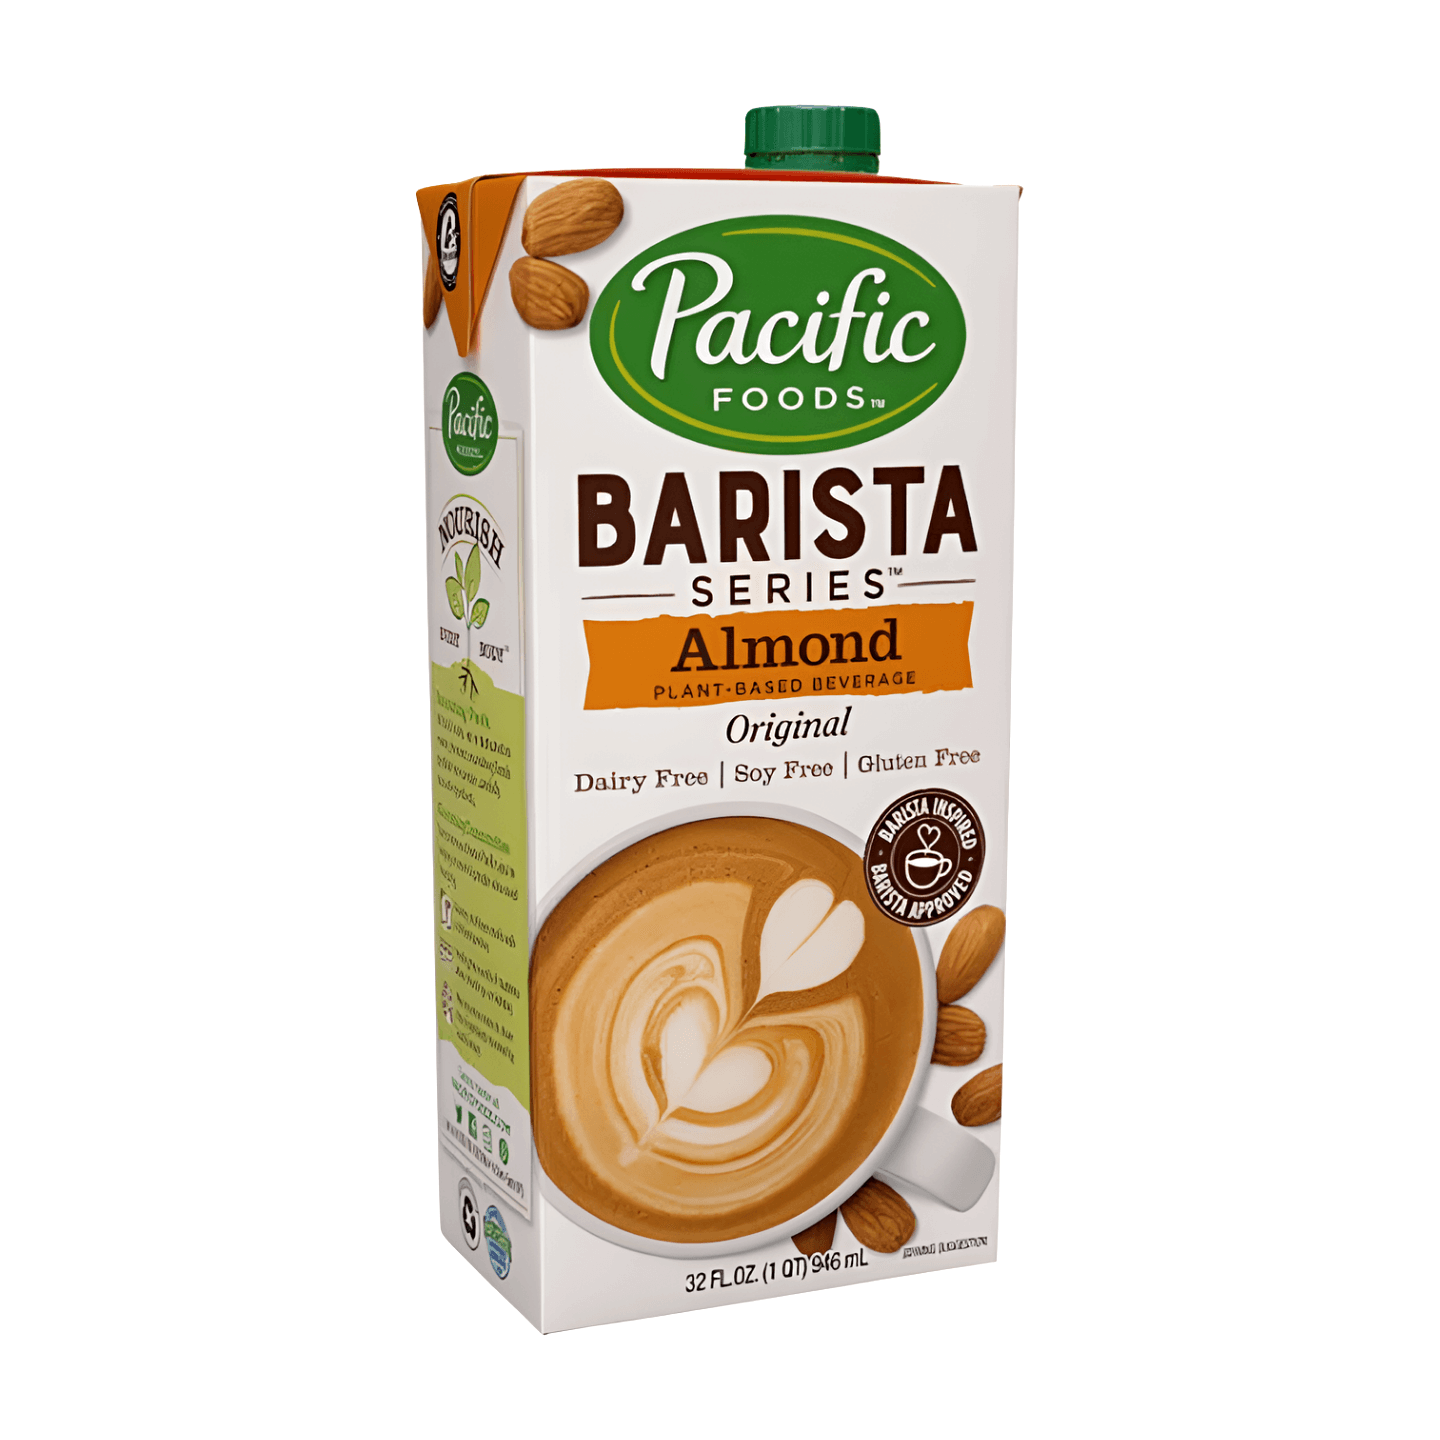 Pacific Foods Barista Series Almond Original